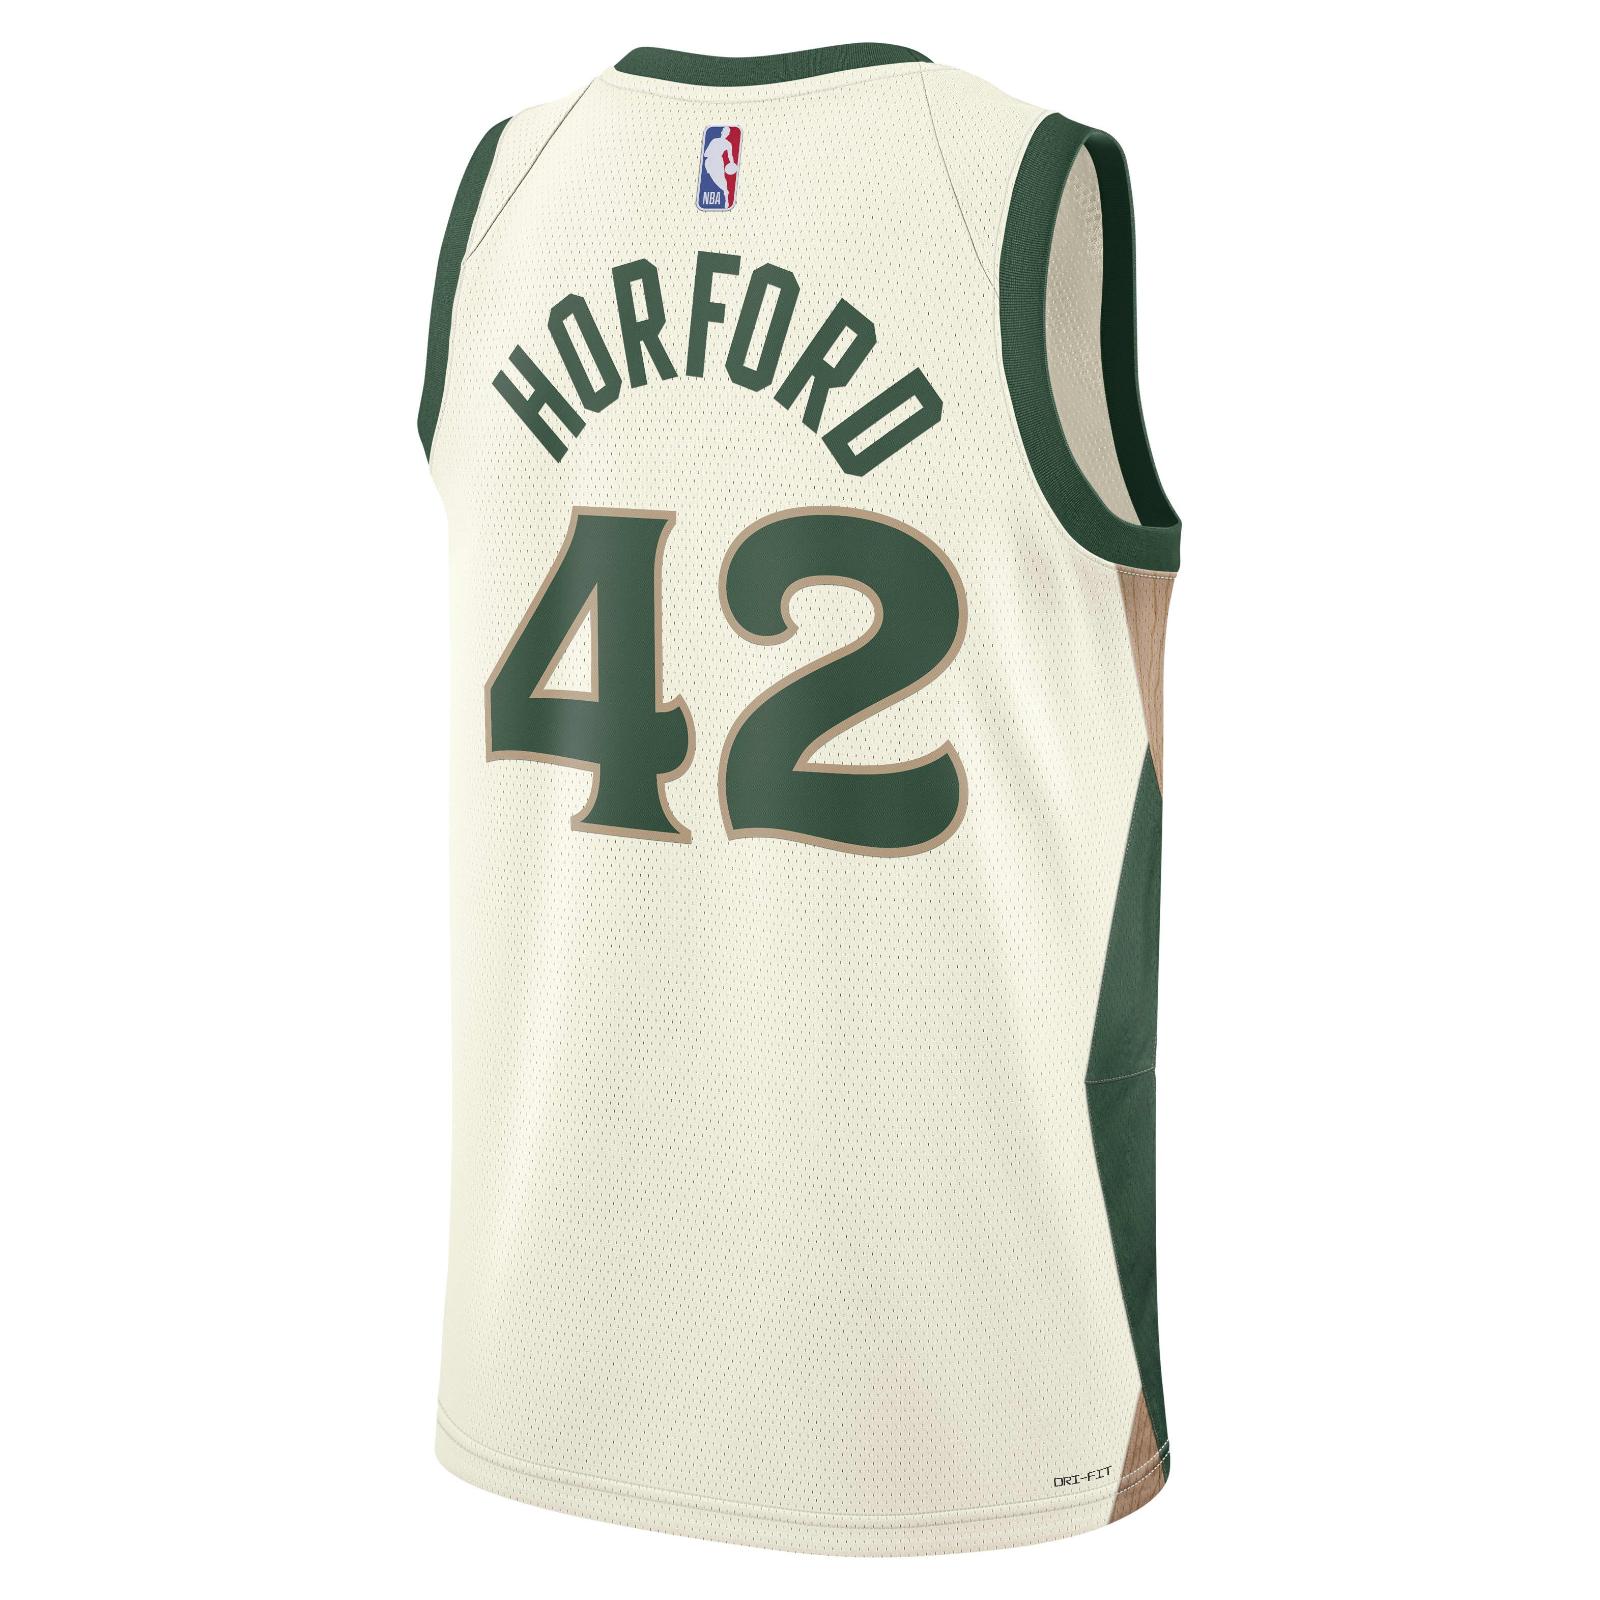 Nike Boston Celtics & New York Knicks 23-24 City Edition Jerseys Leaked